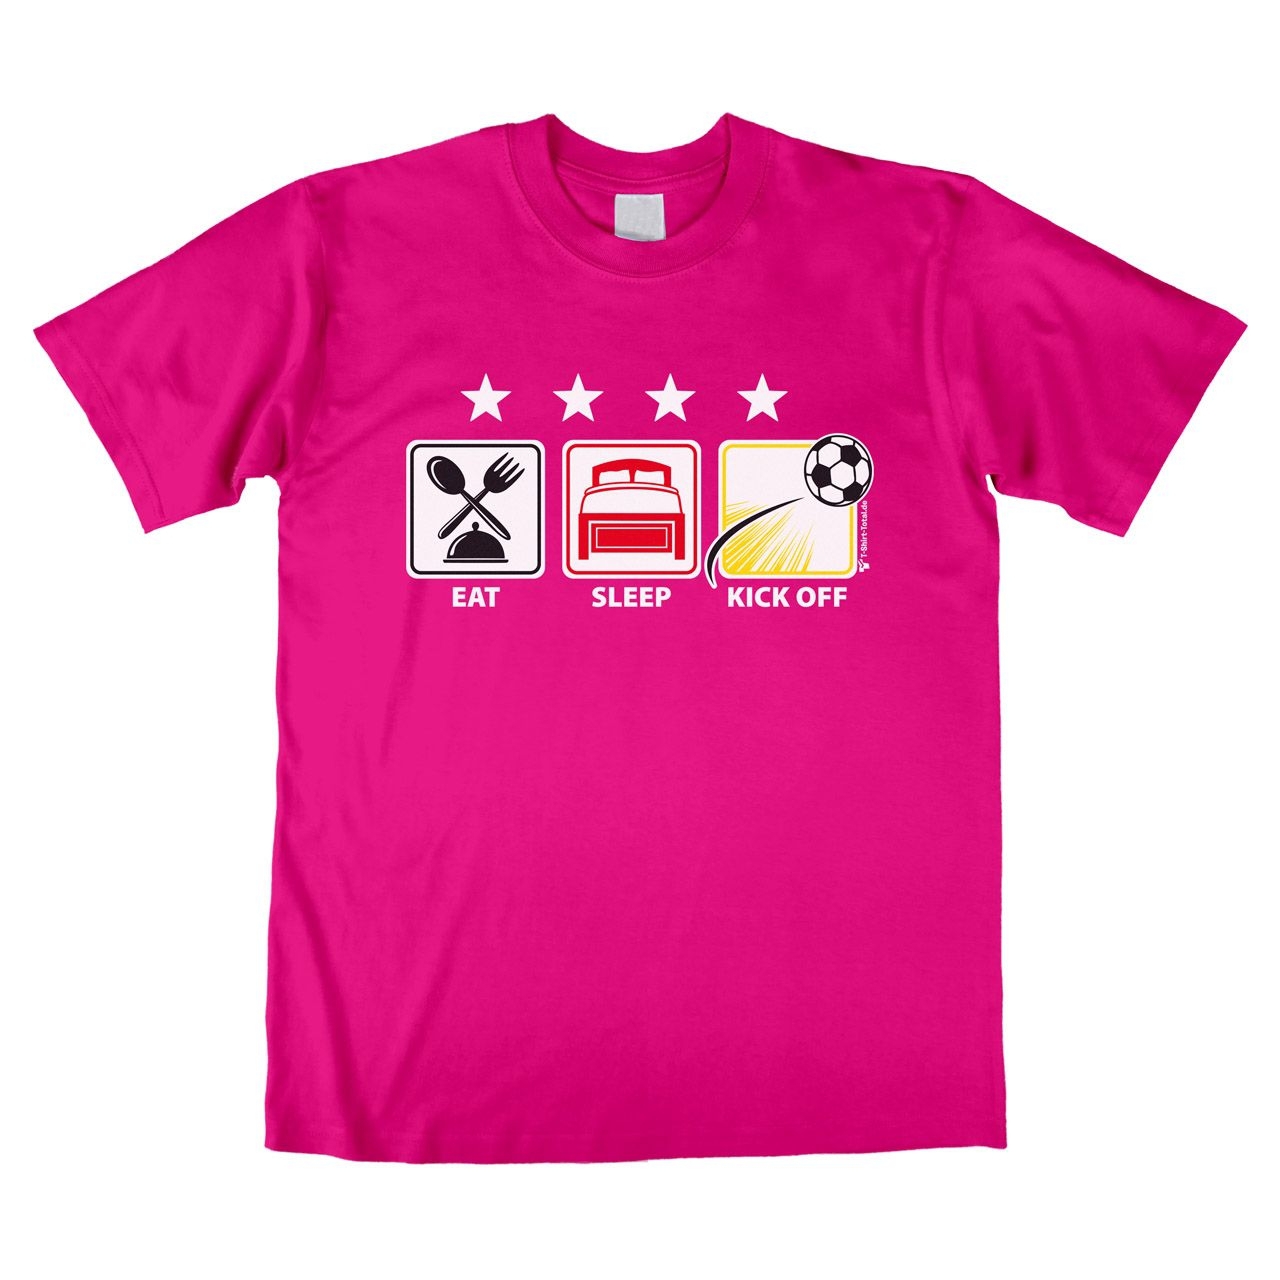 Eat Sleep Kick off Unisex T-Shirt pink Medium